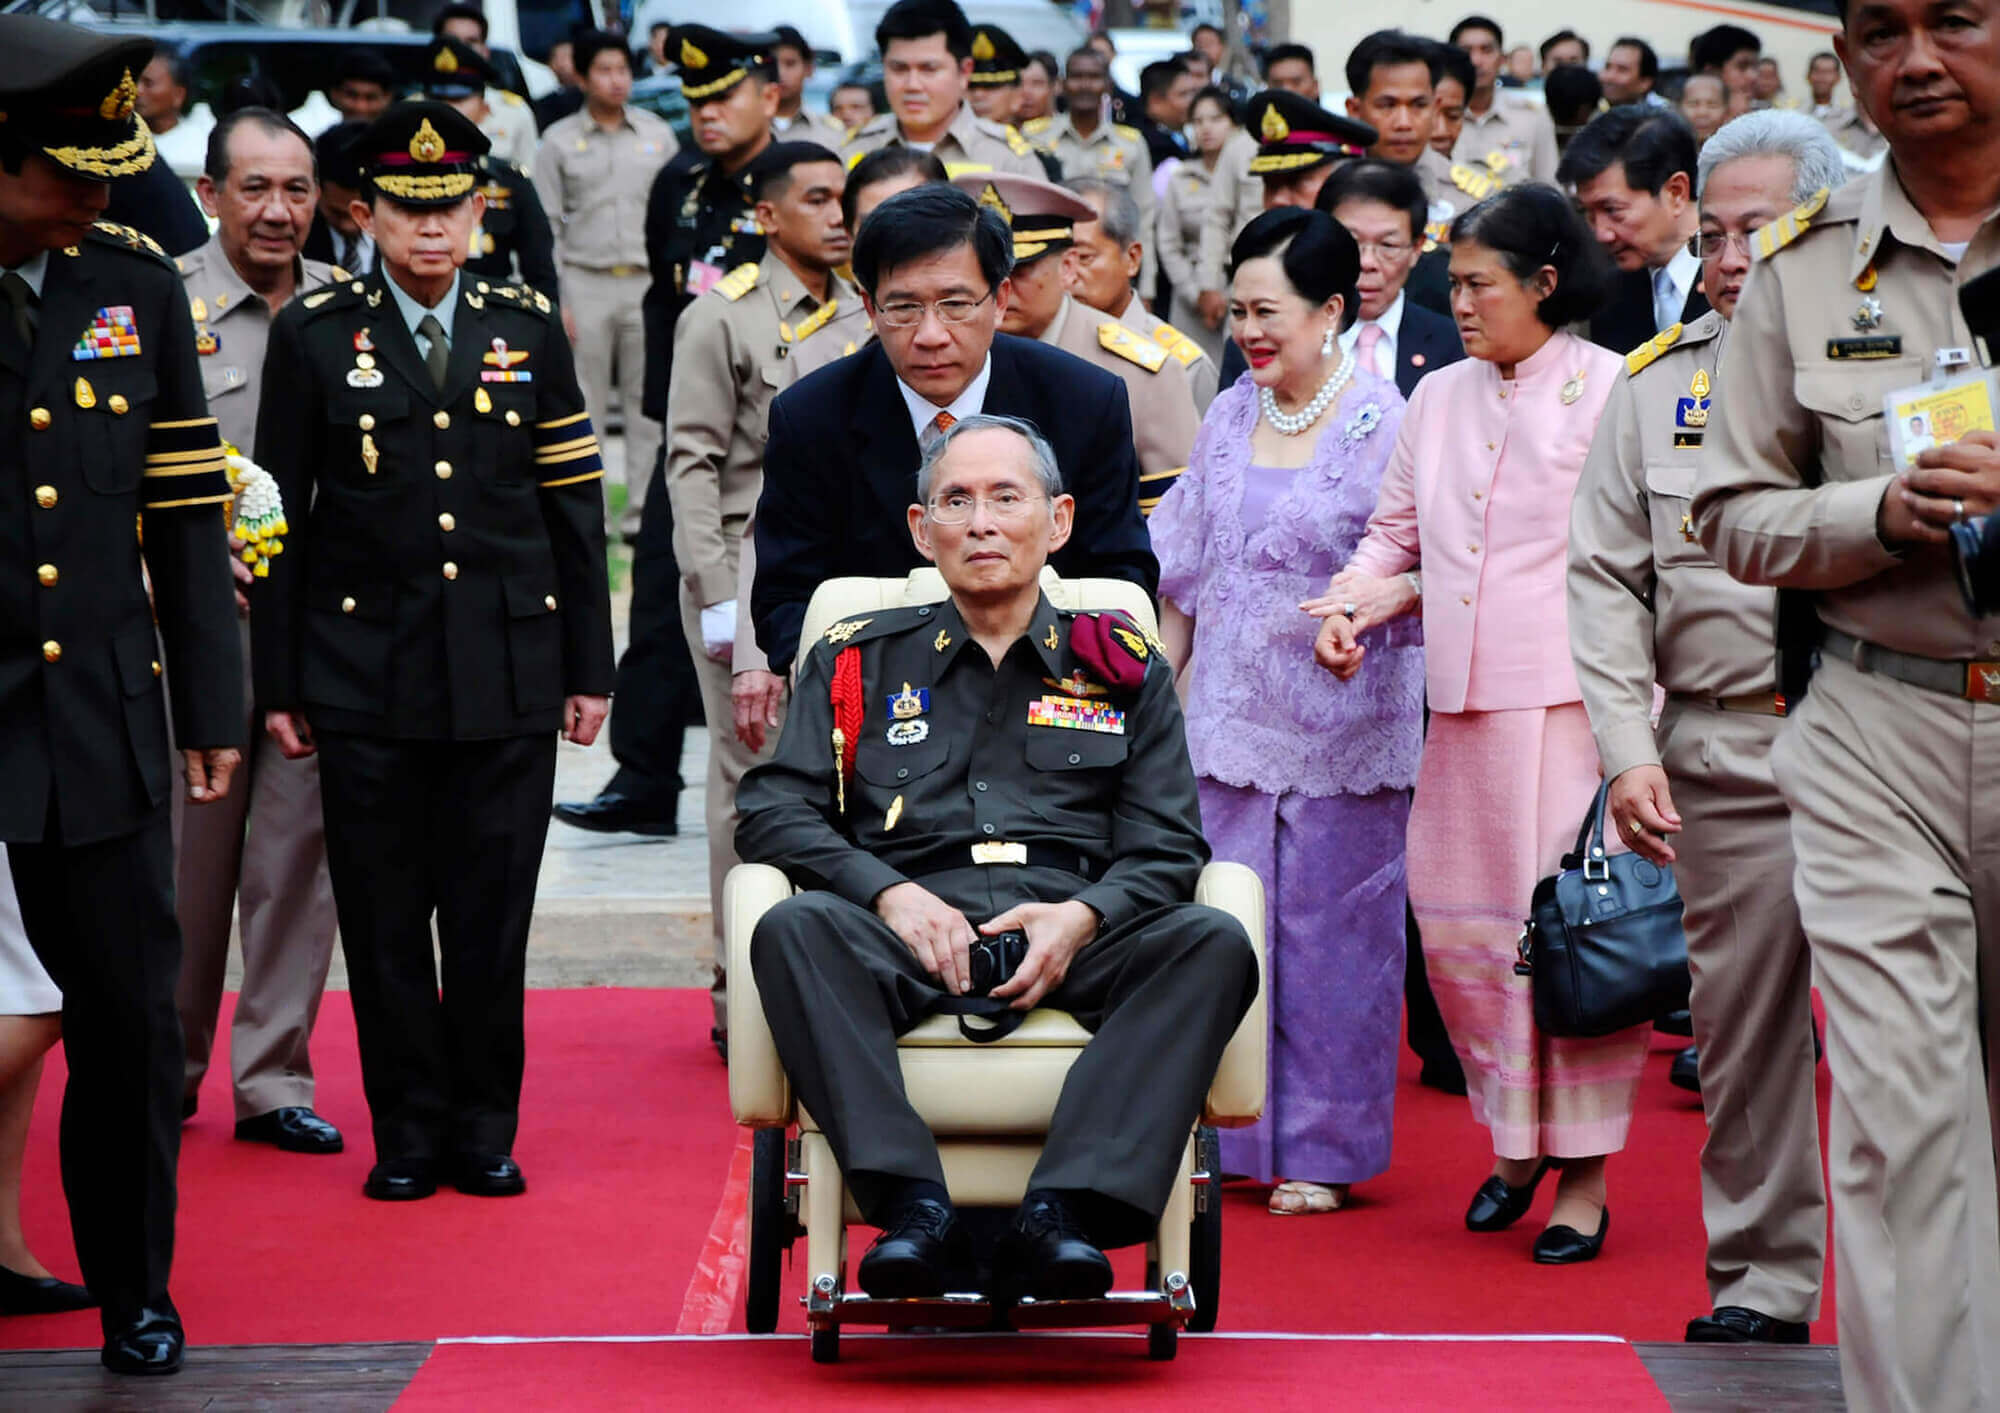 Image of King Bhumibol Adulyadej